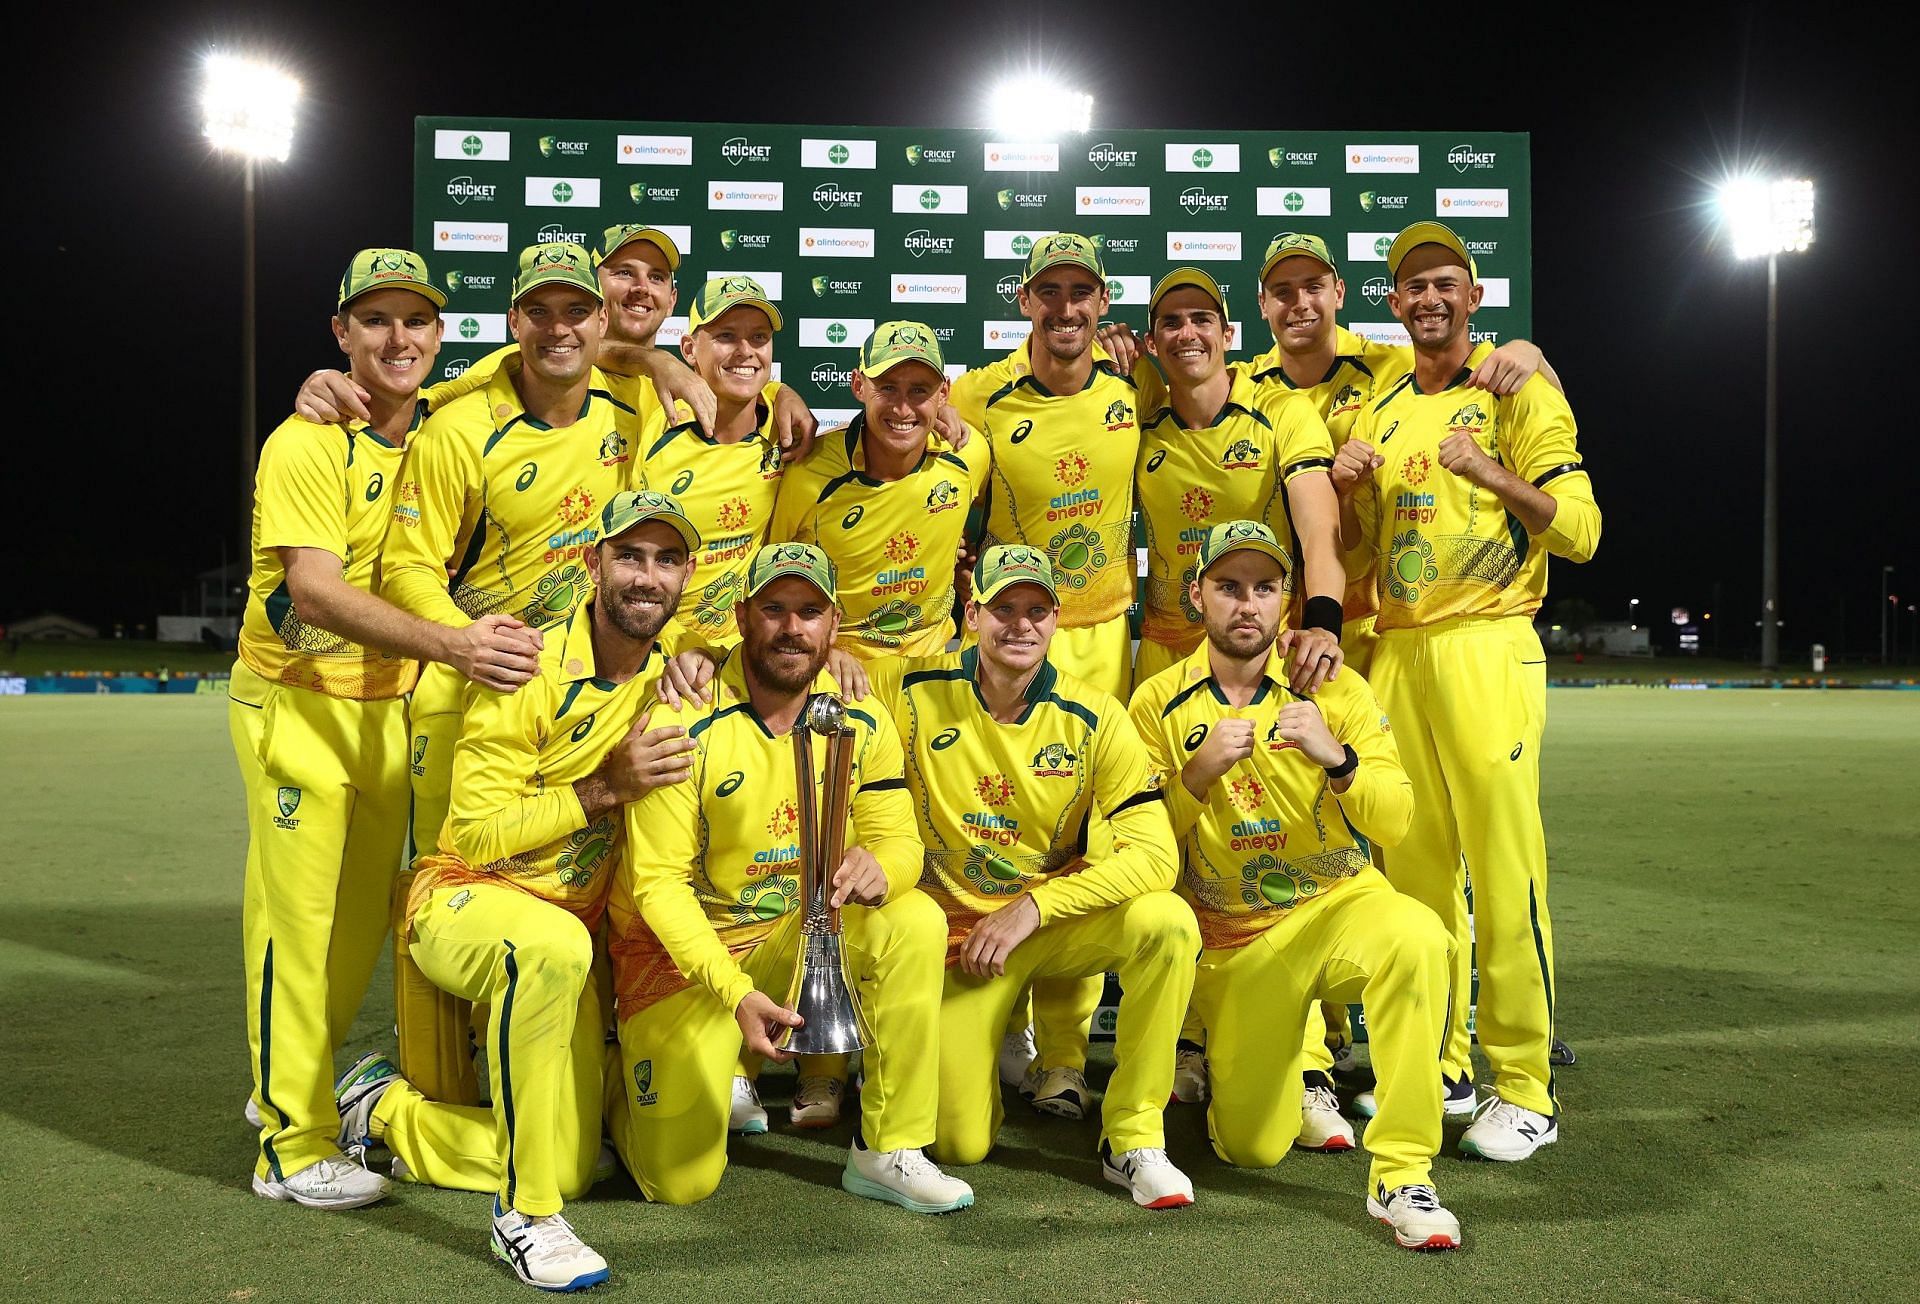 Image Credits: Cricket Australia on X